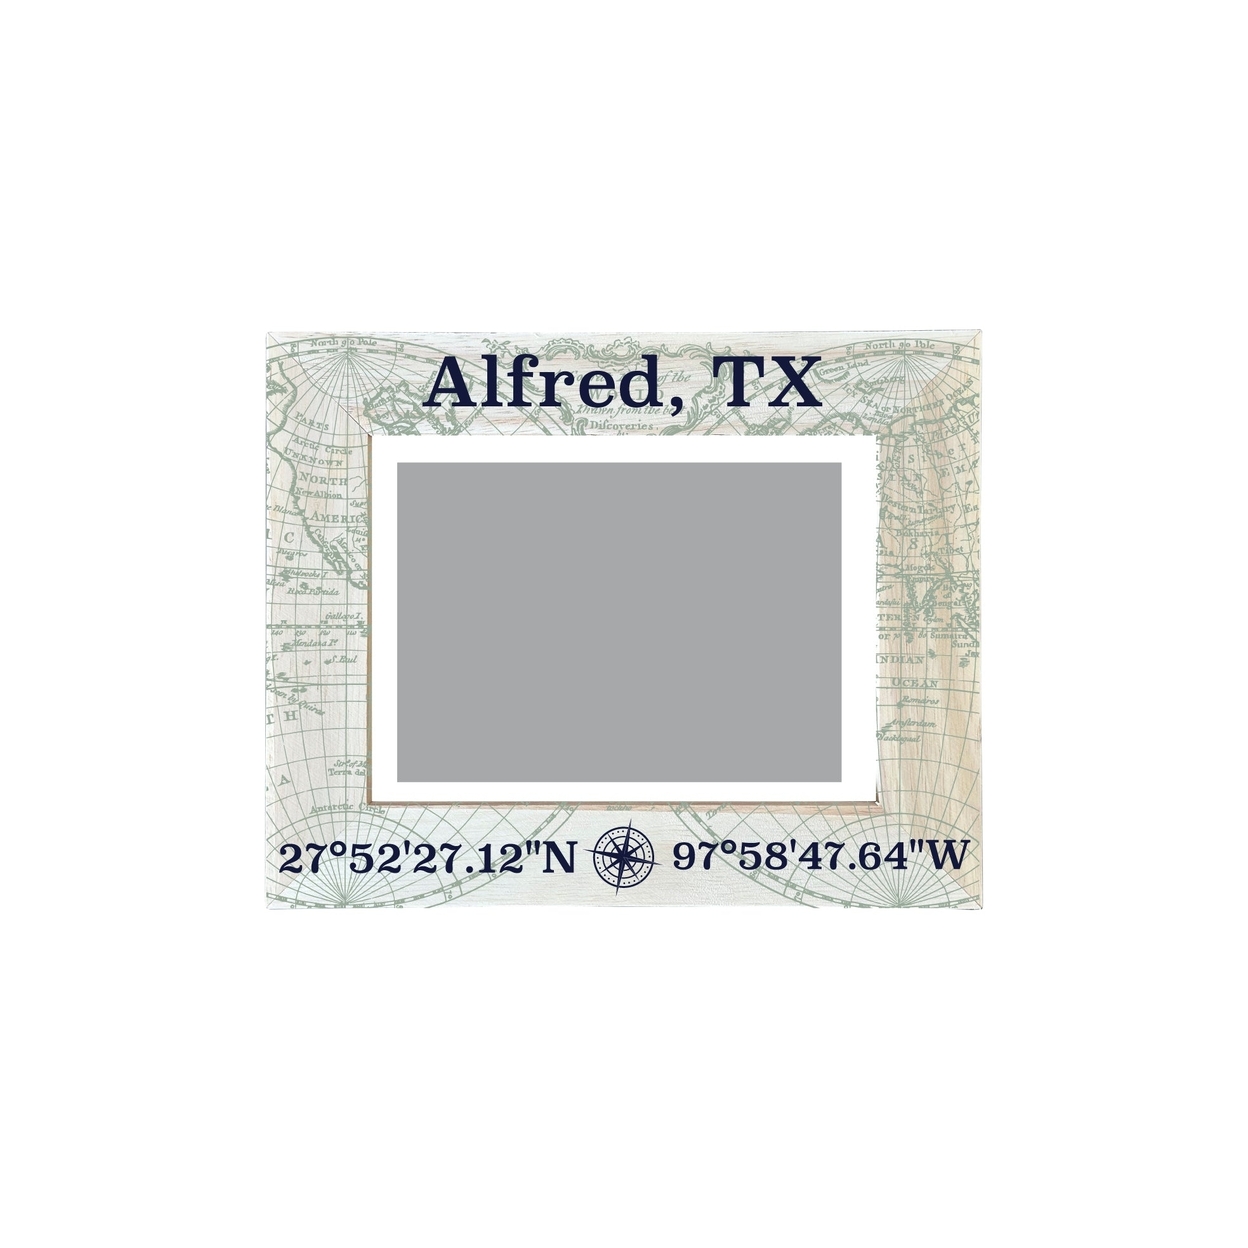 Alfred Texas Souvenir Wooden Photo Frame Compass Coordinates Design Matted To 4 X 6